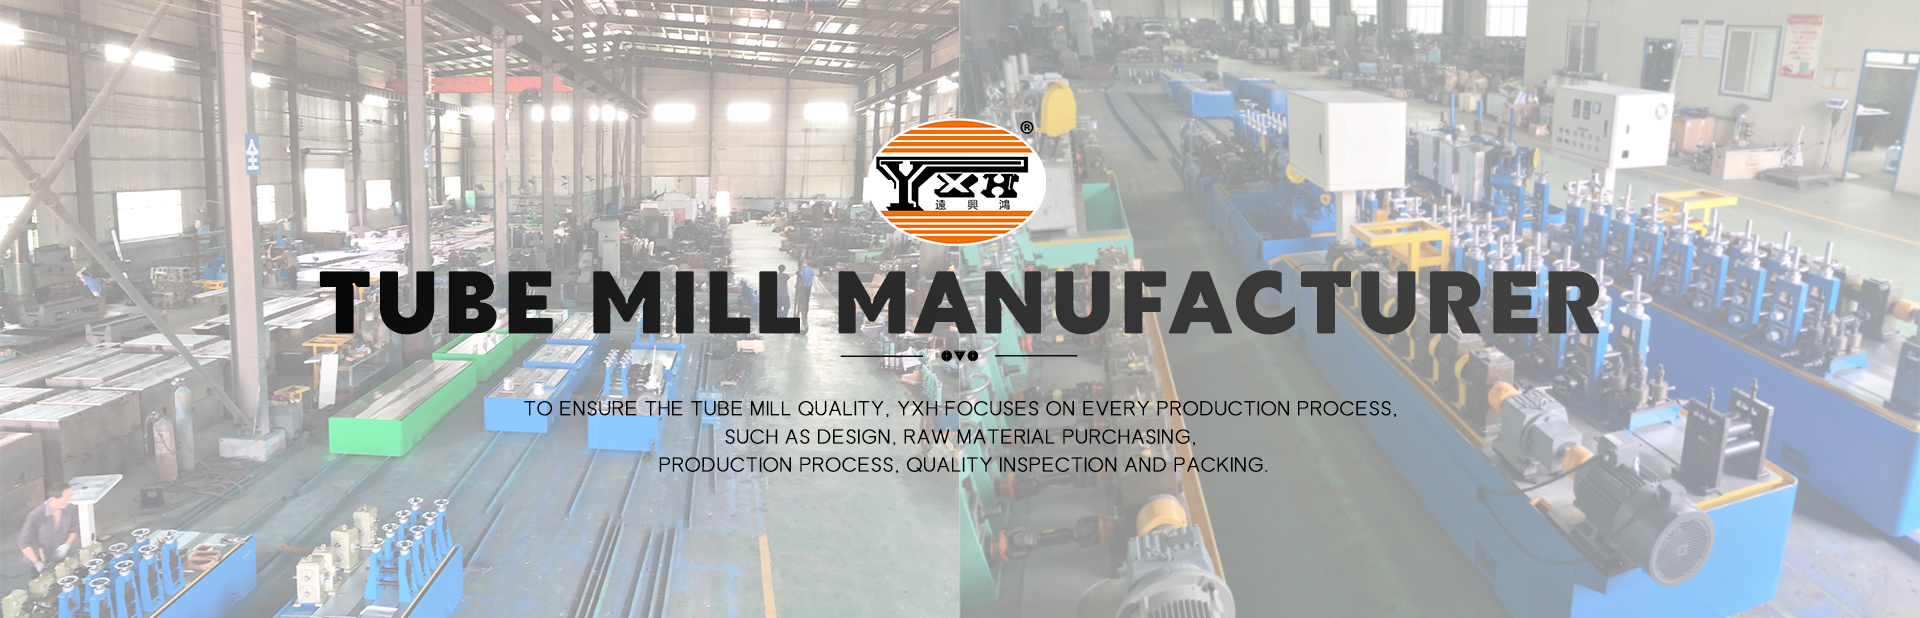 Tube Mill Manufacturer